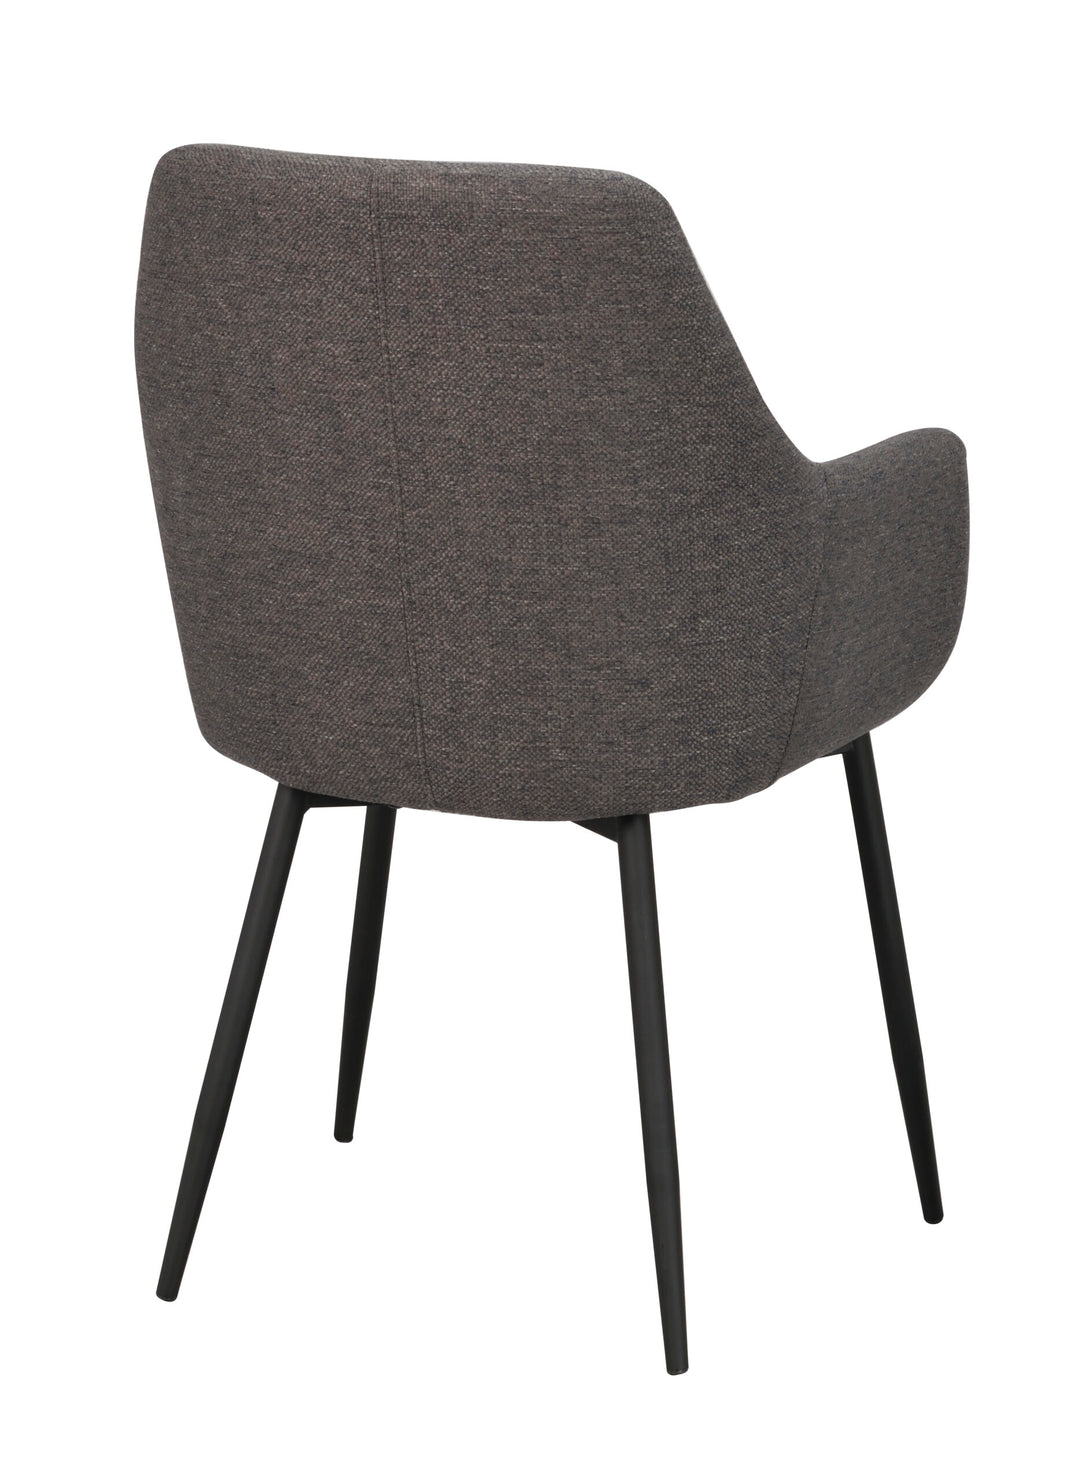 110458_d, Reily arm chair, grey fabric_black